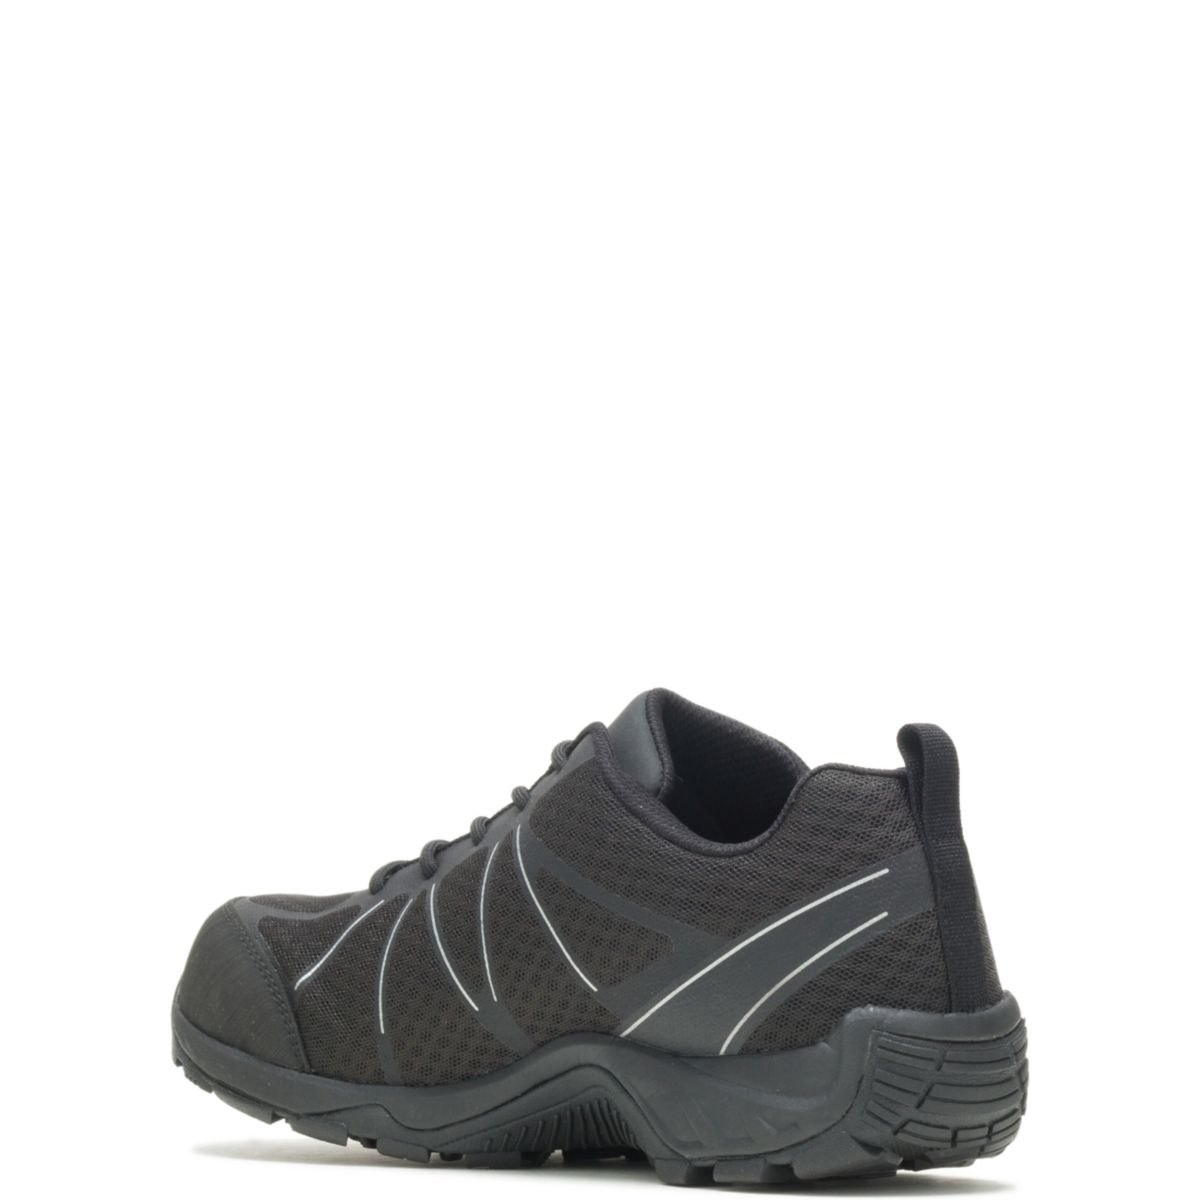 WOLVERINE Men's Amherst II CarbonMAXÂ® Composite Toe Work Shoe Black - W201147 BLACK - BLACK, 11 X-Wide